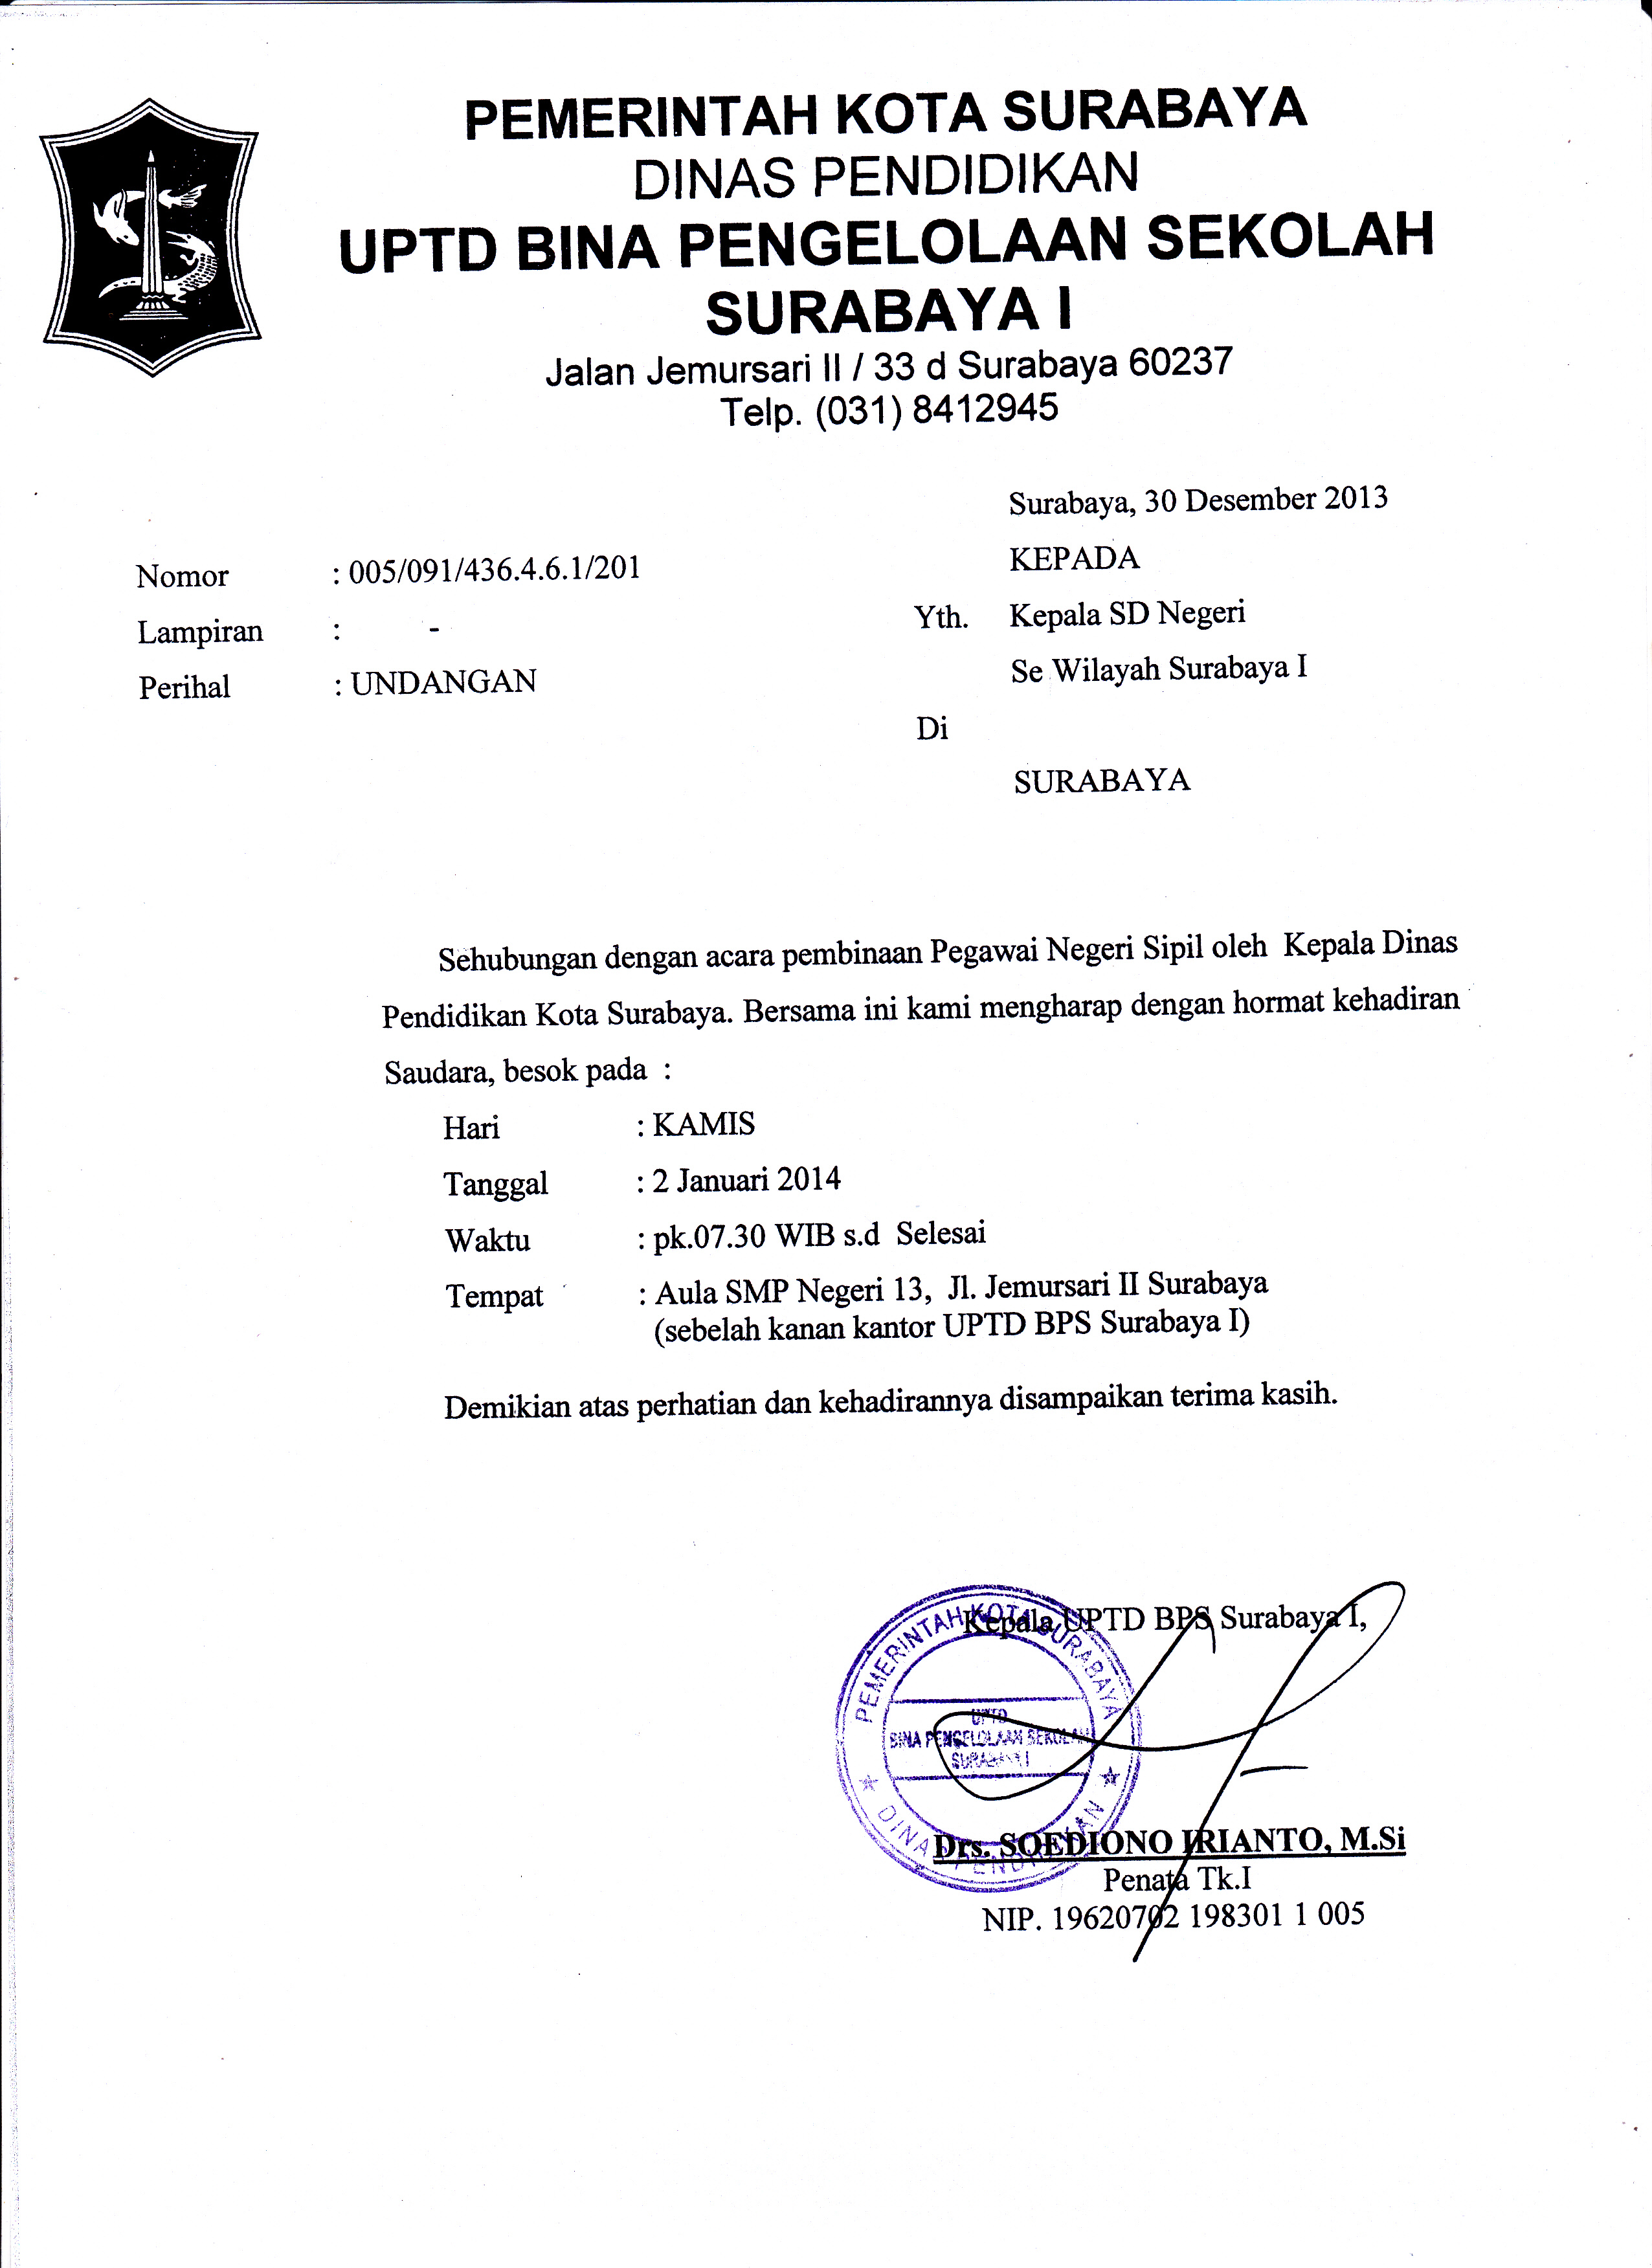 Undangan Pembinaan Uptd Bps Surabaya 1